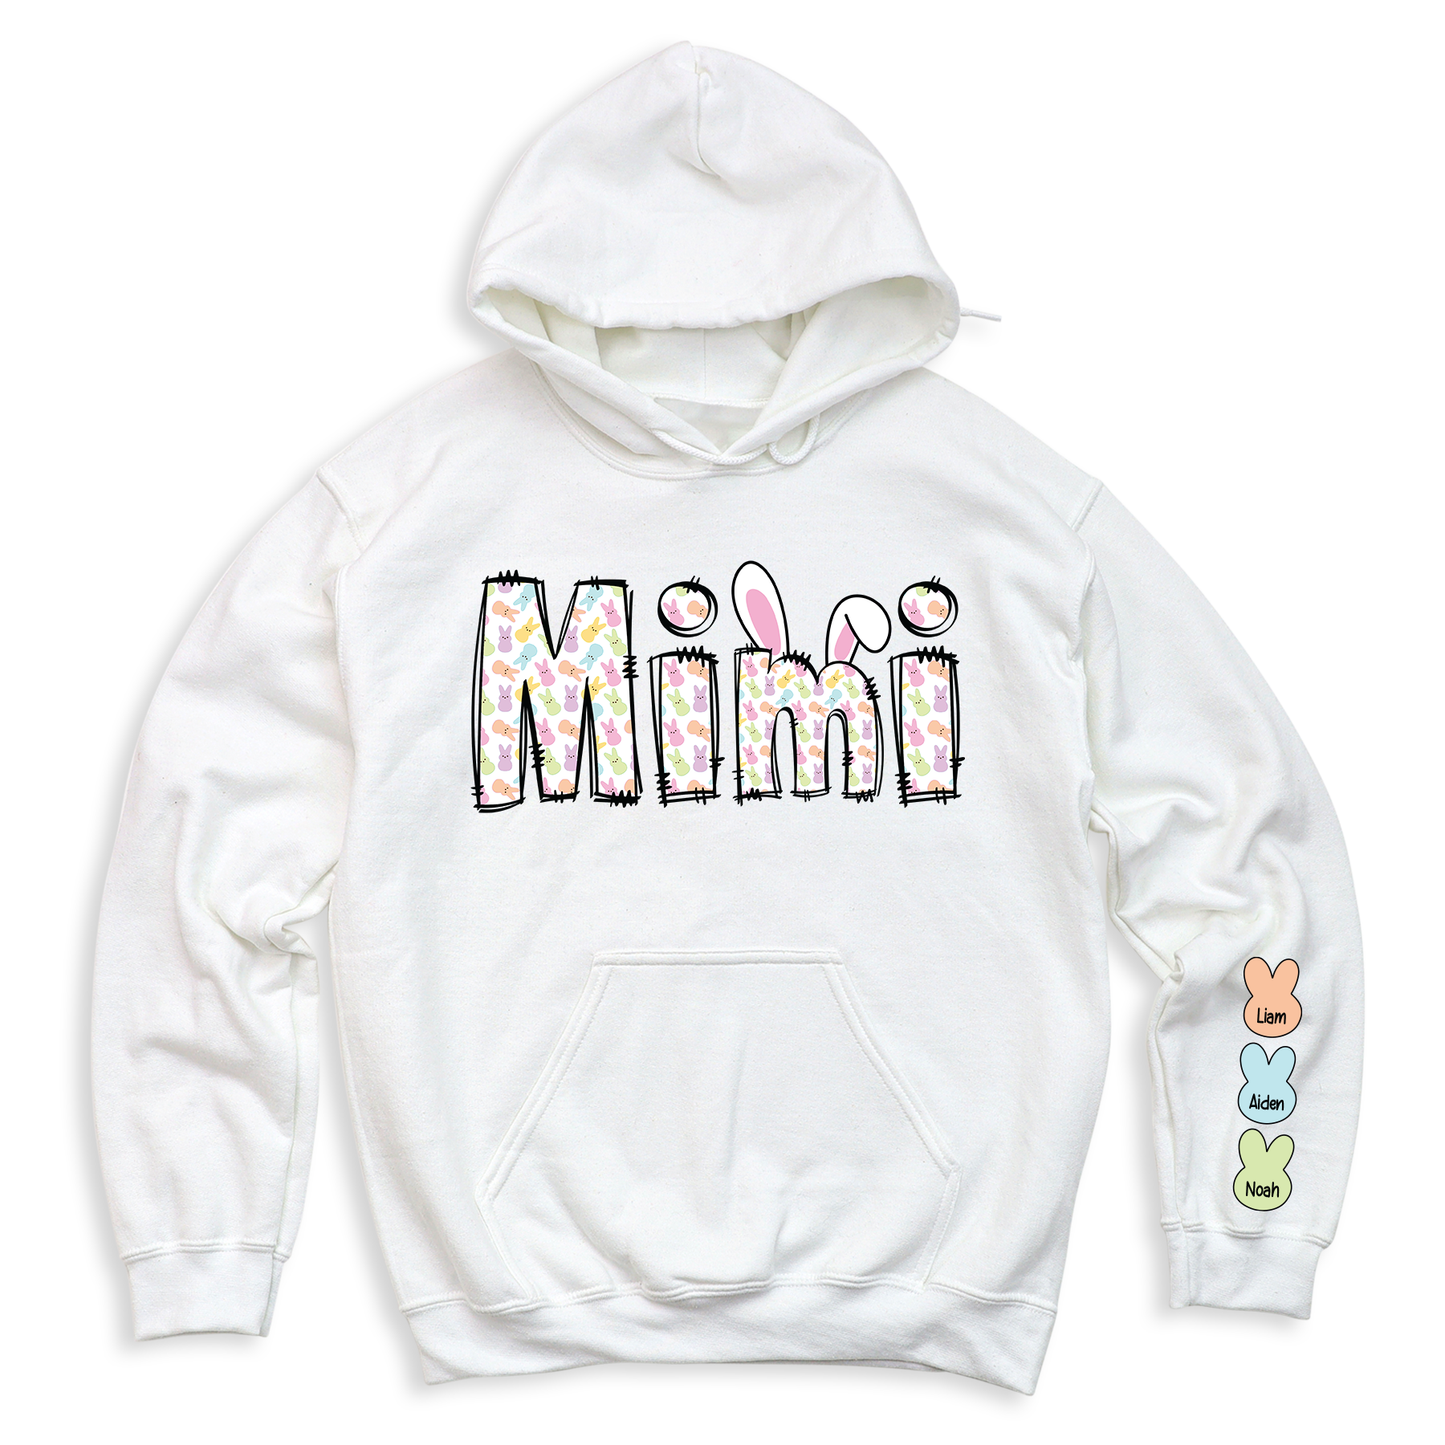 Custom Rabbit Mimi Sweatshirt with Kid's Name on Sleeve